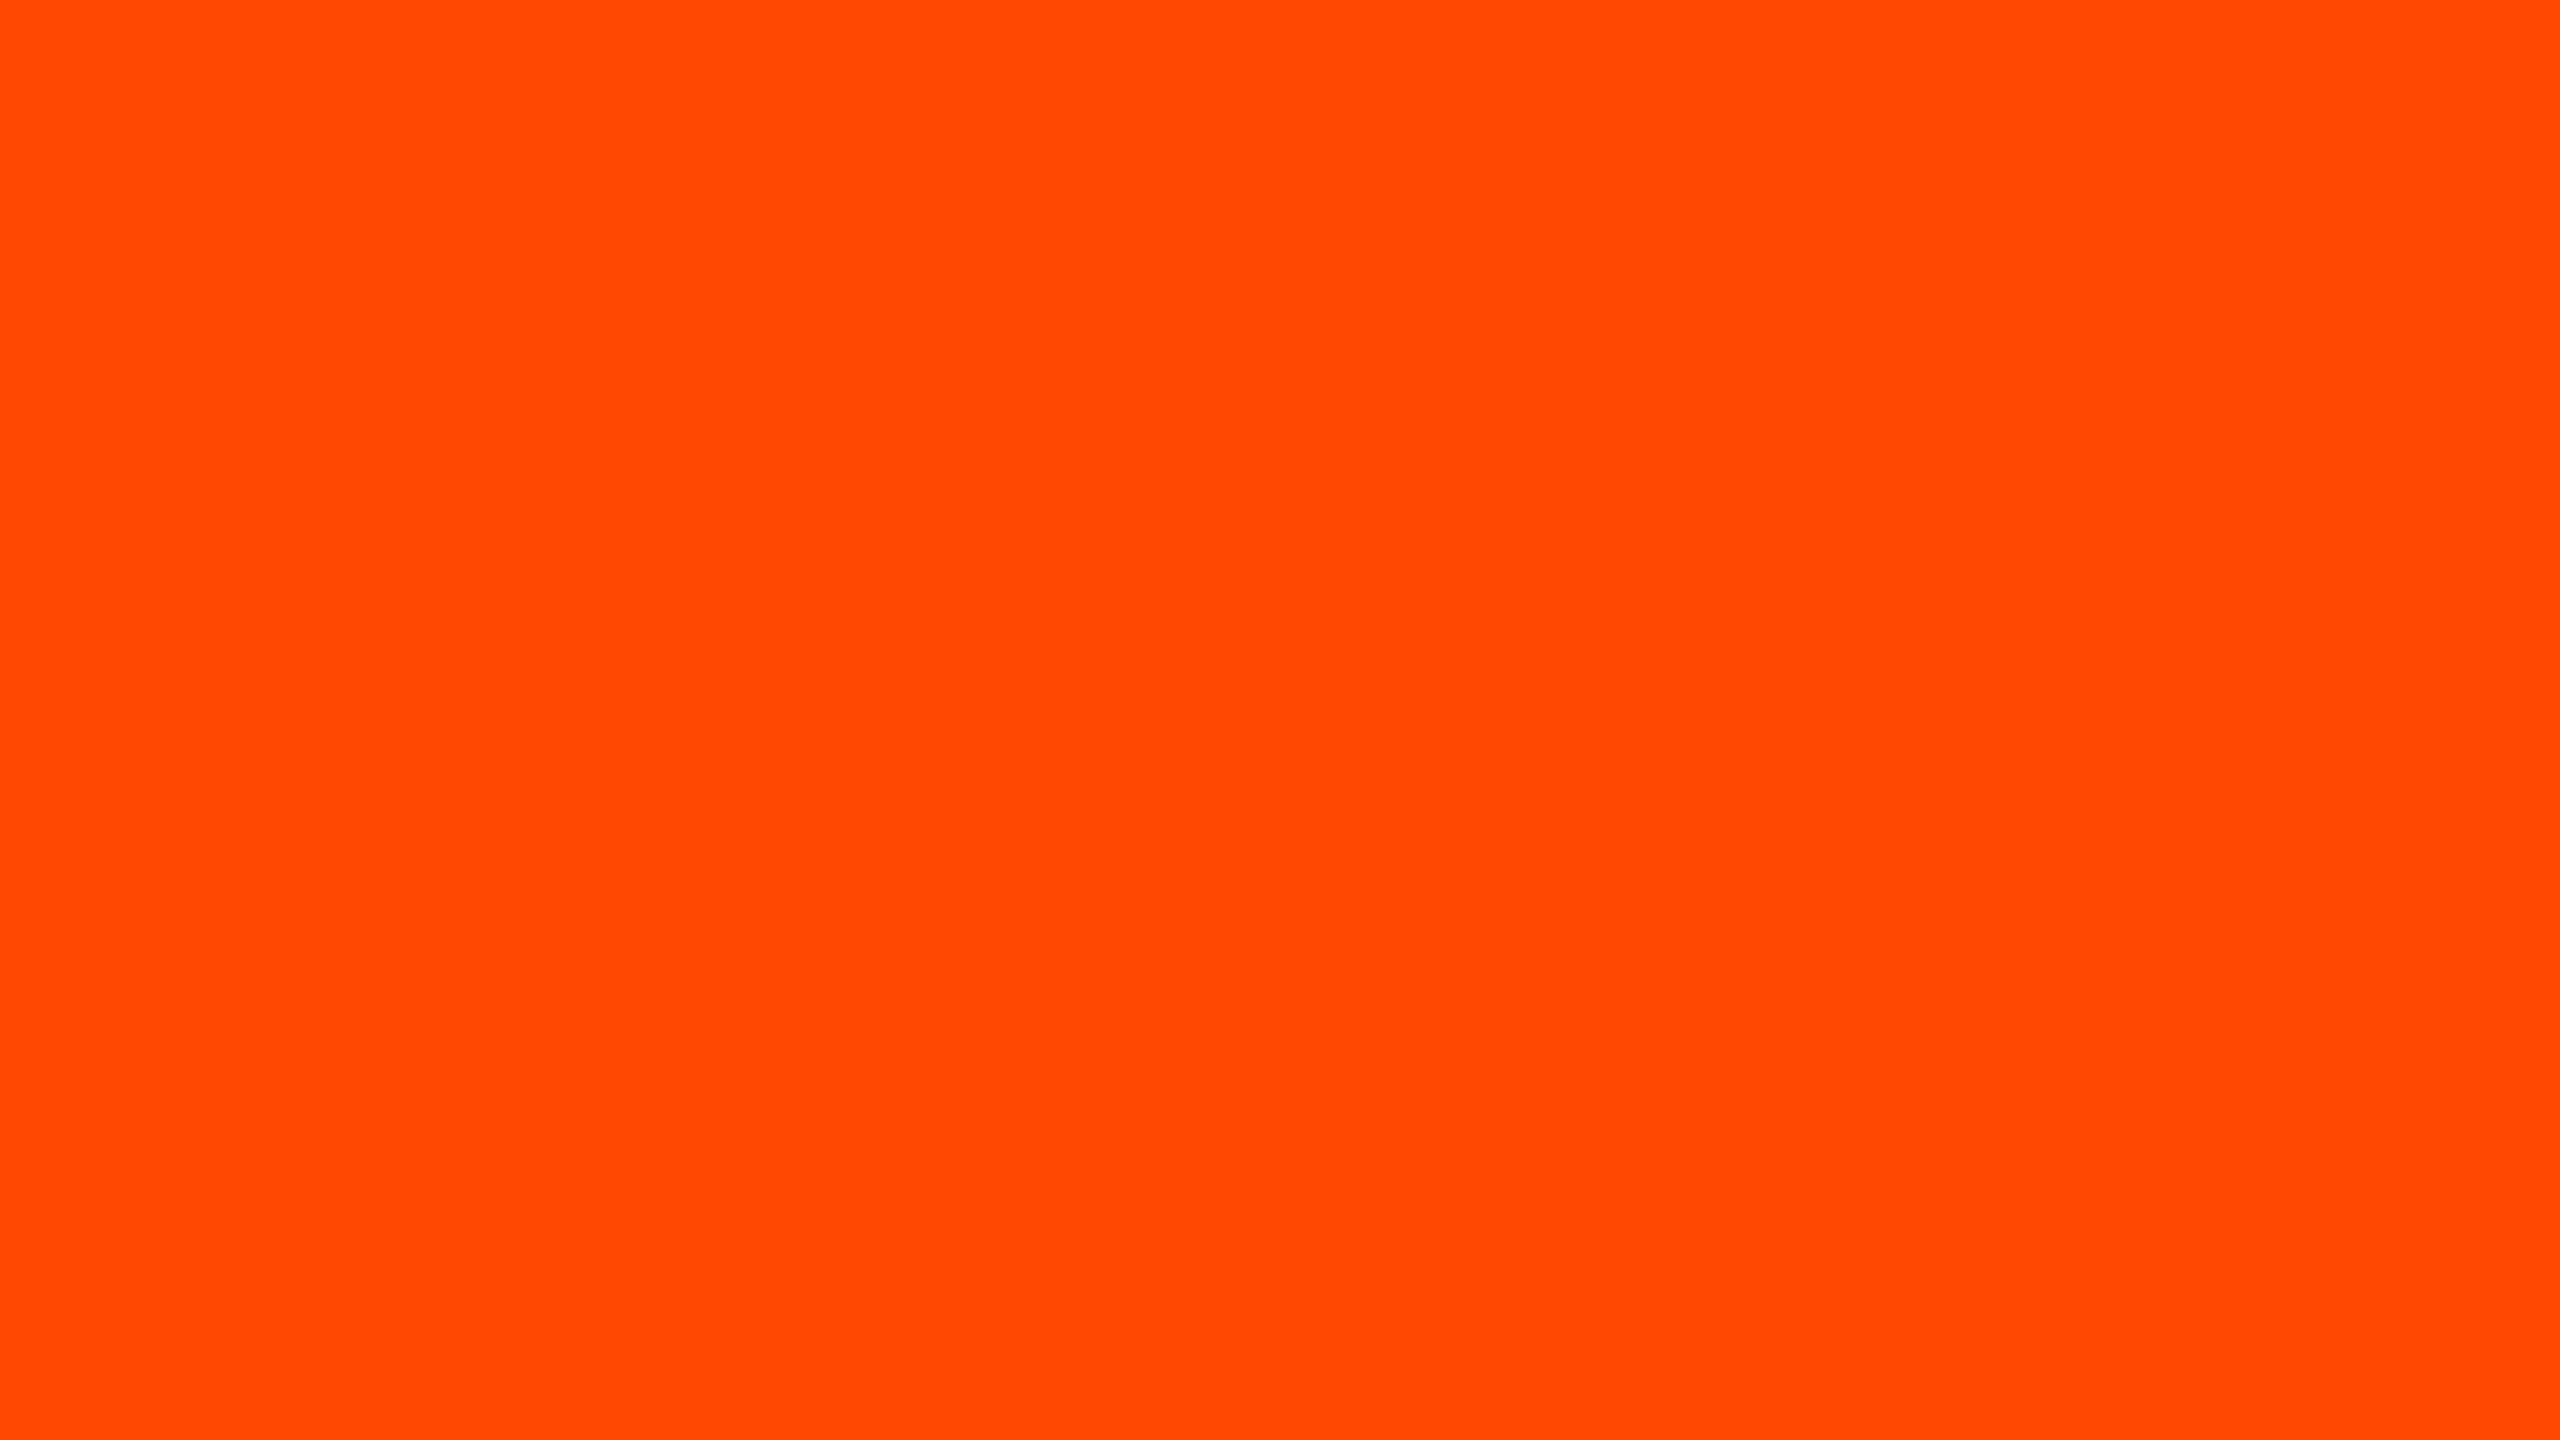 30k Neon Orange Pictures  Download Free Images on Unsplash